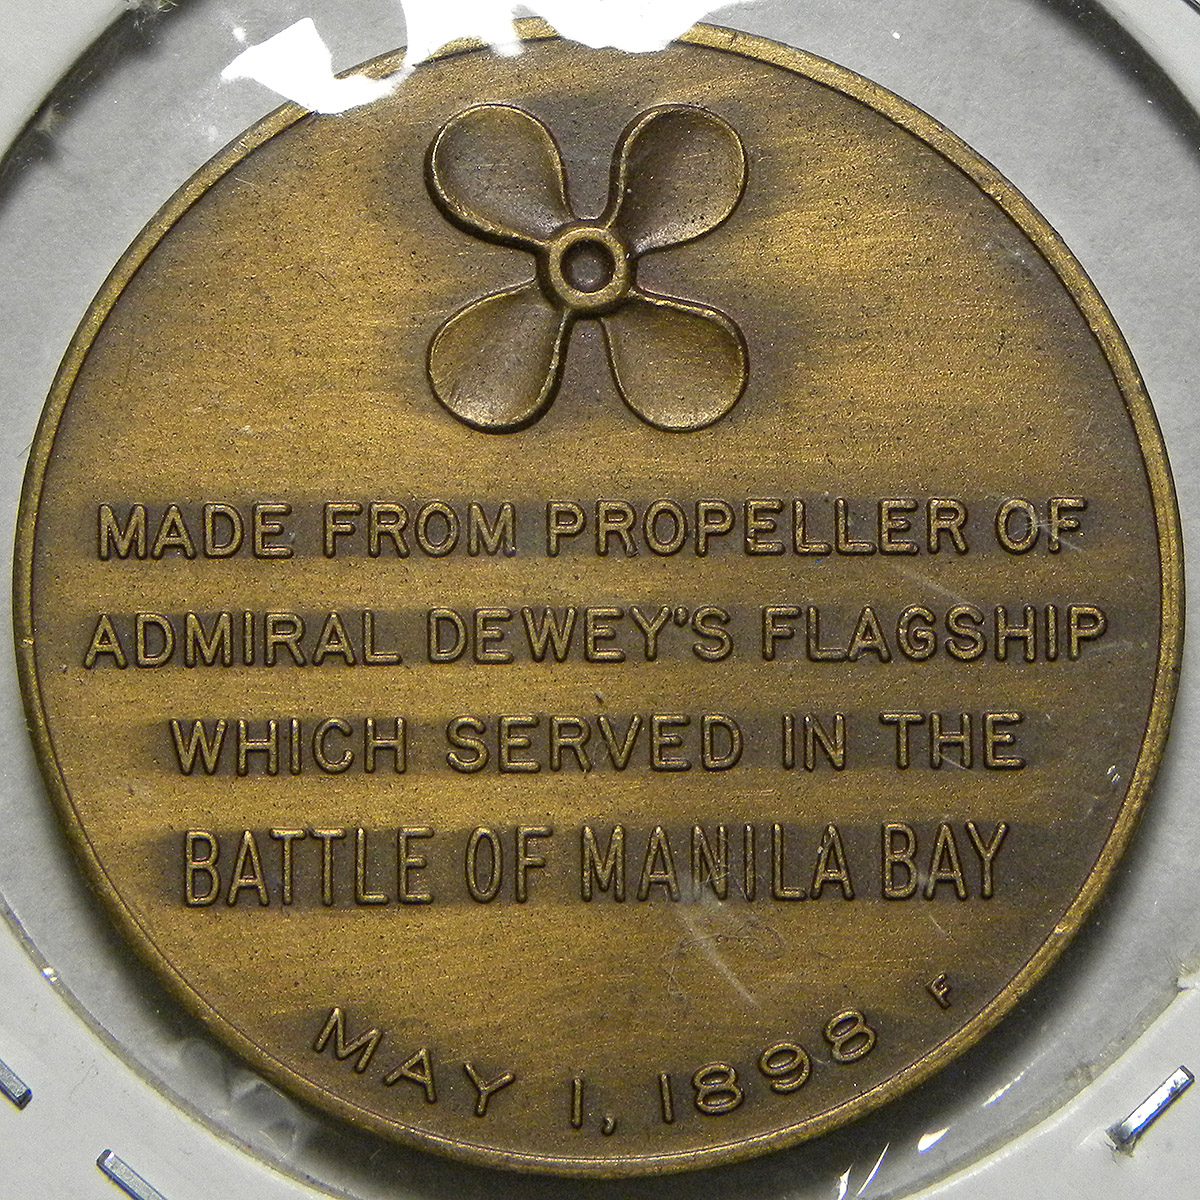 Admiral Dewey / U.S.S. Olympia / Battle of Manila Bay medal (reverse)